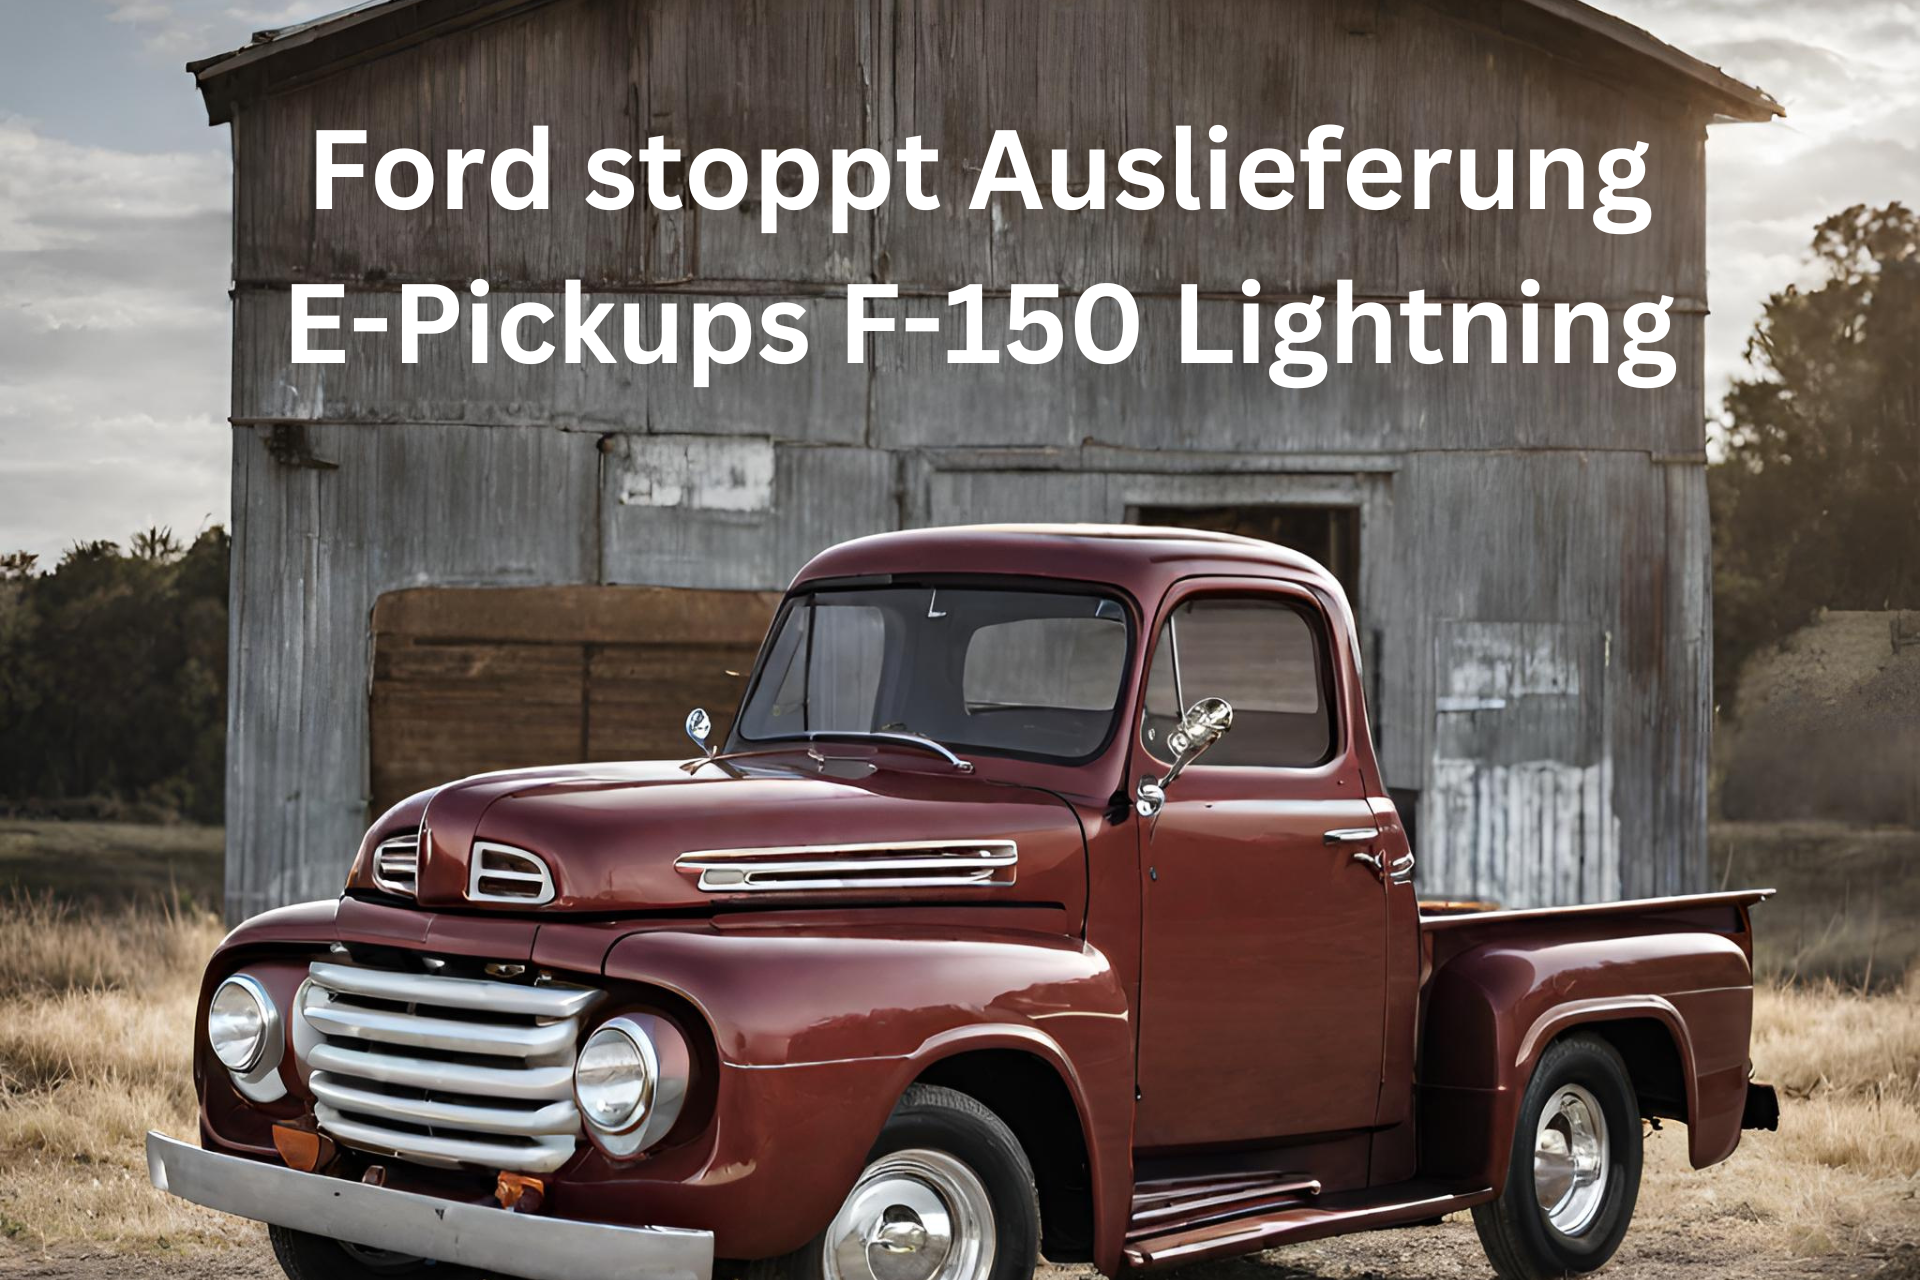 Ford F-150 Lightning Auslieferung stoppt für E-Pickup